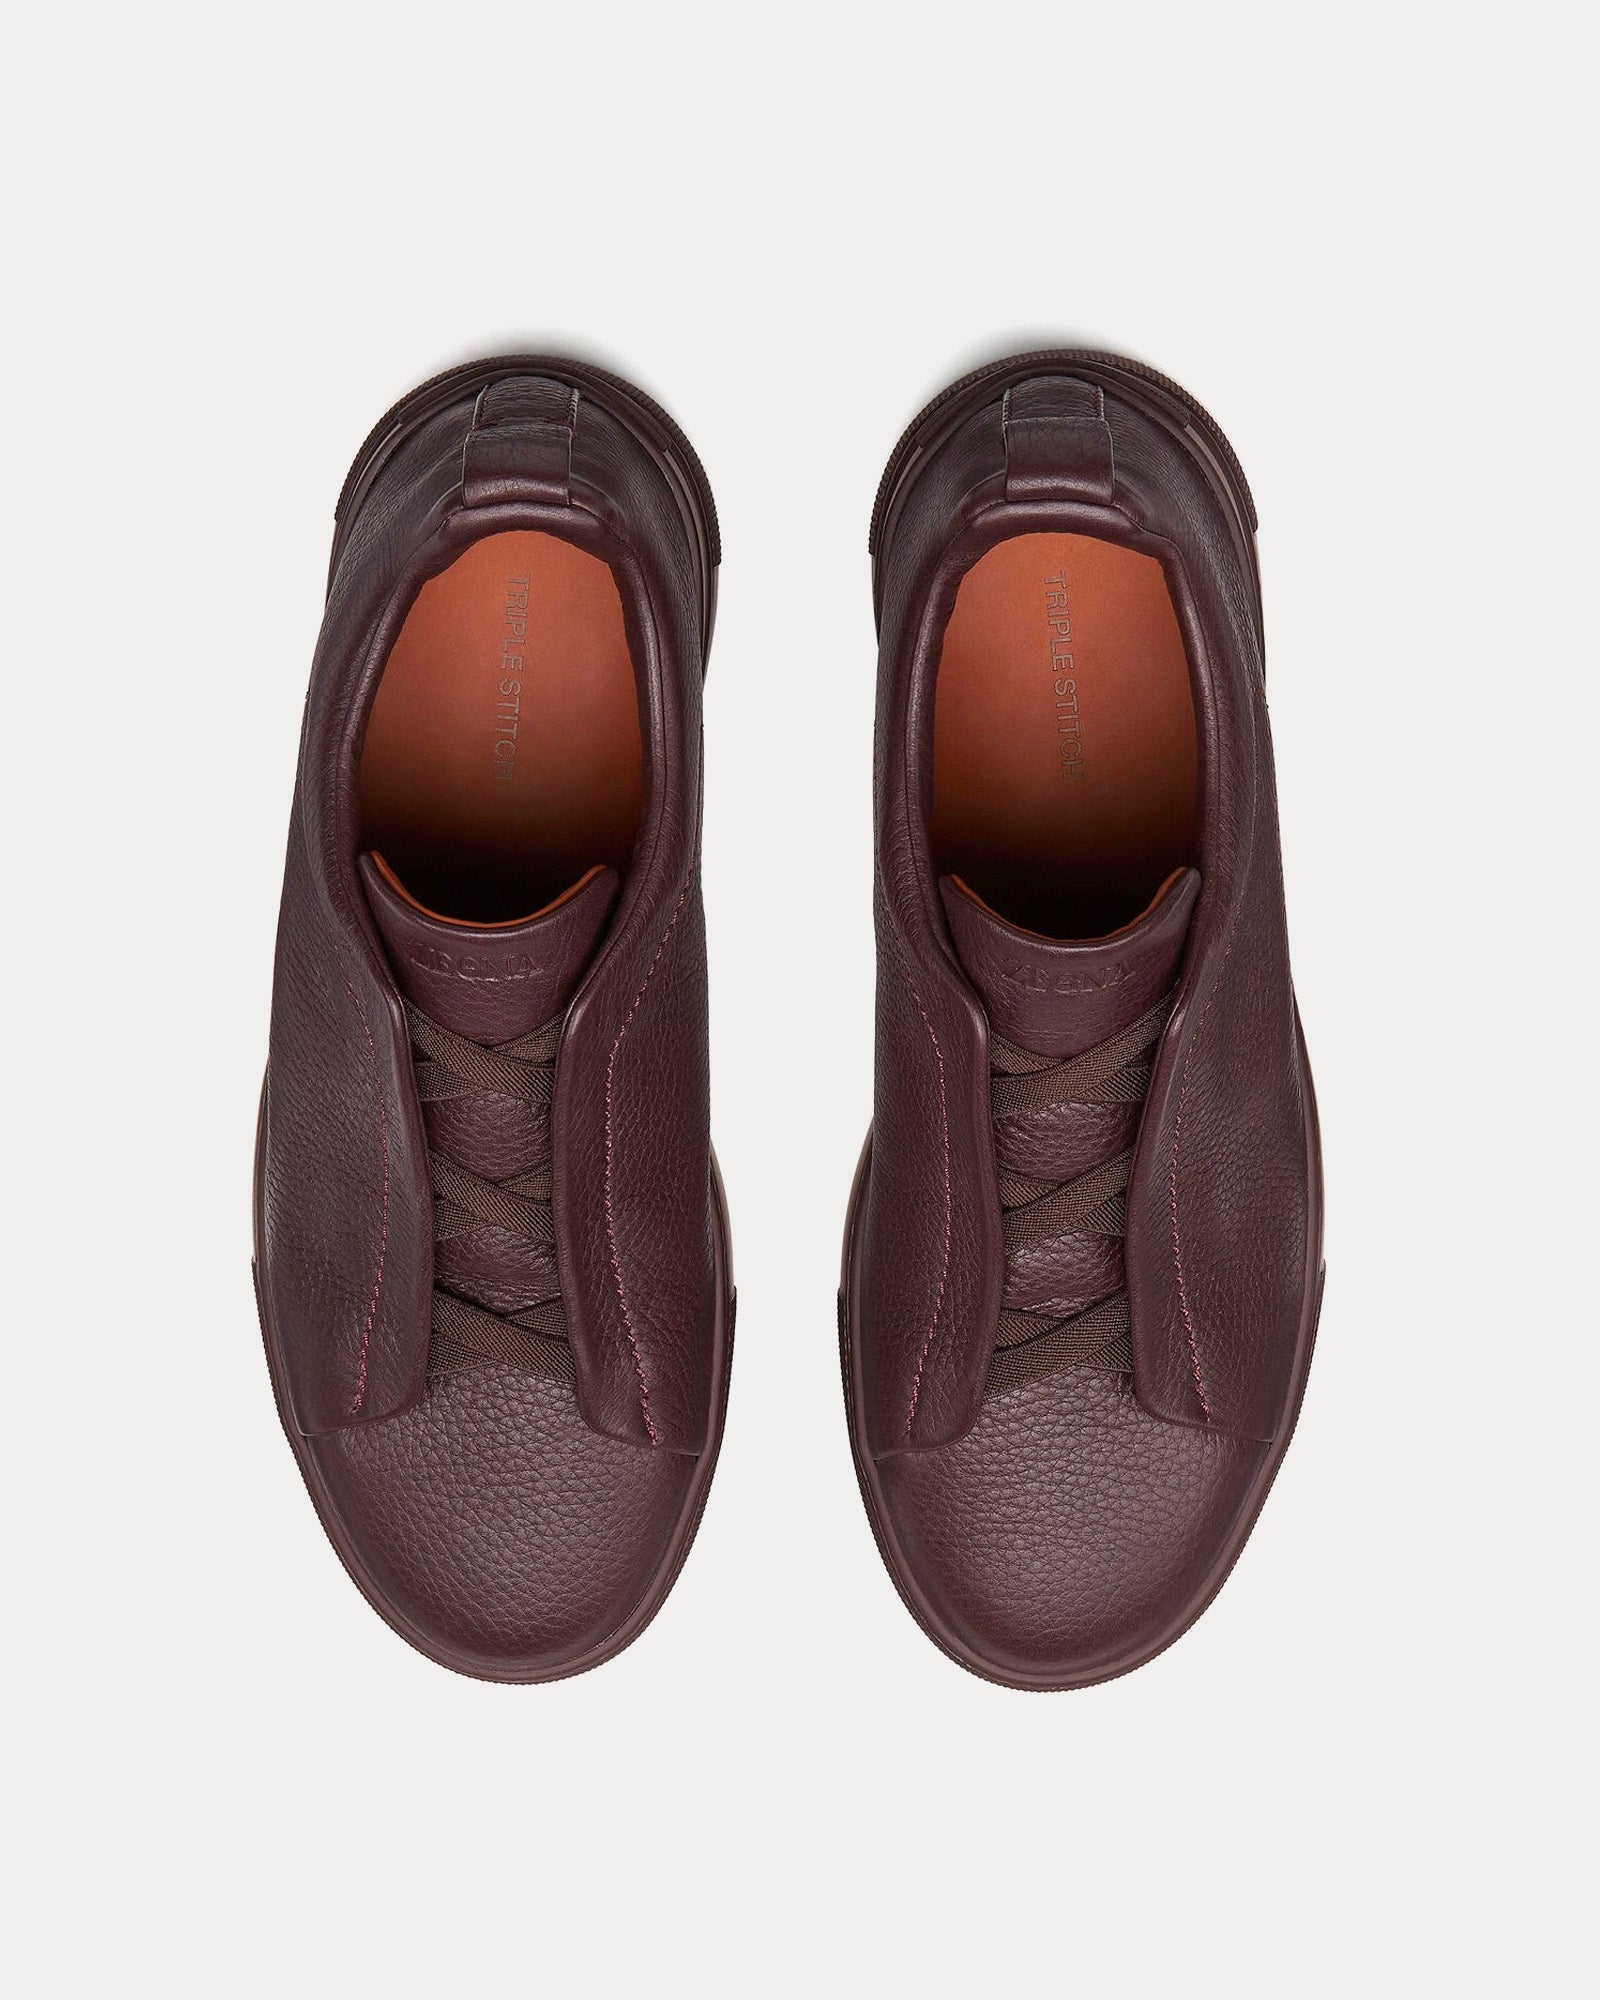 Zegna - Triple Stitch Deerskin Dark Burgundy Slip On Sneakers